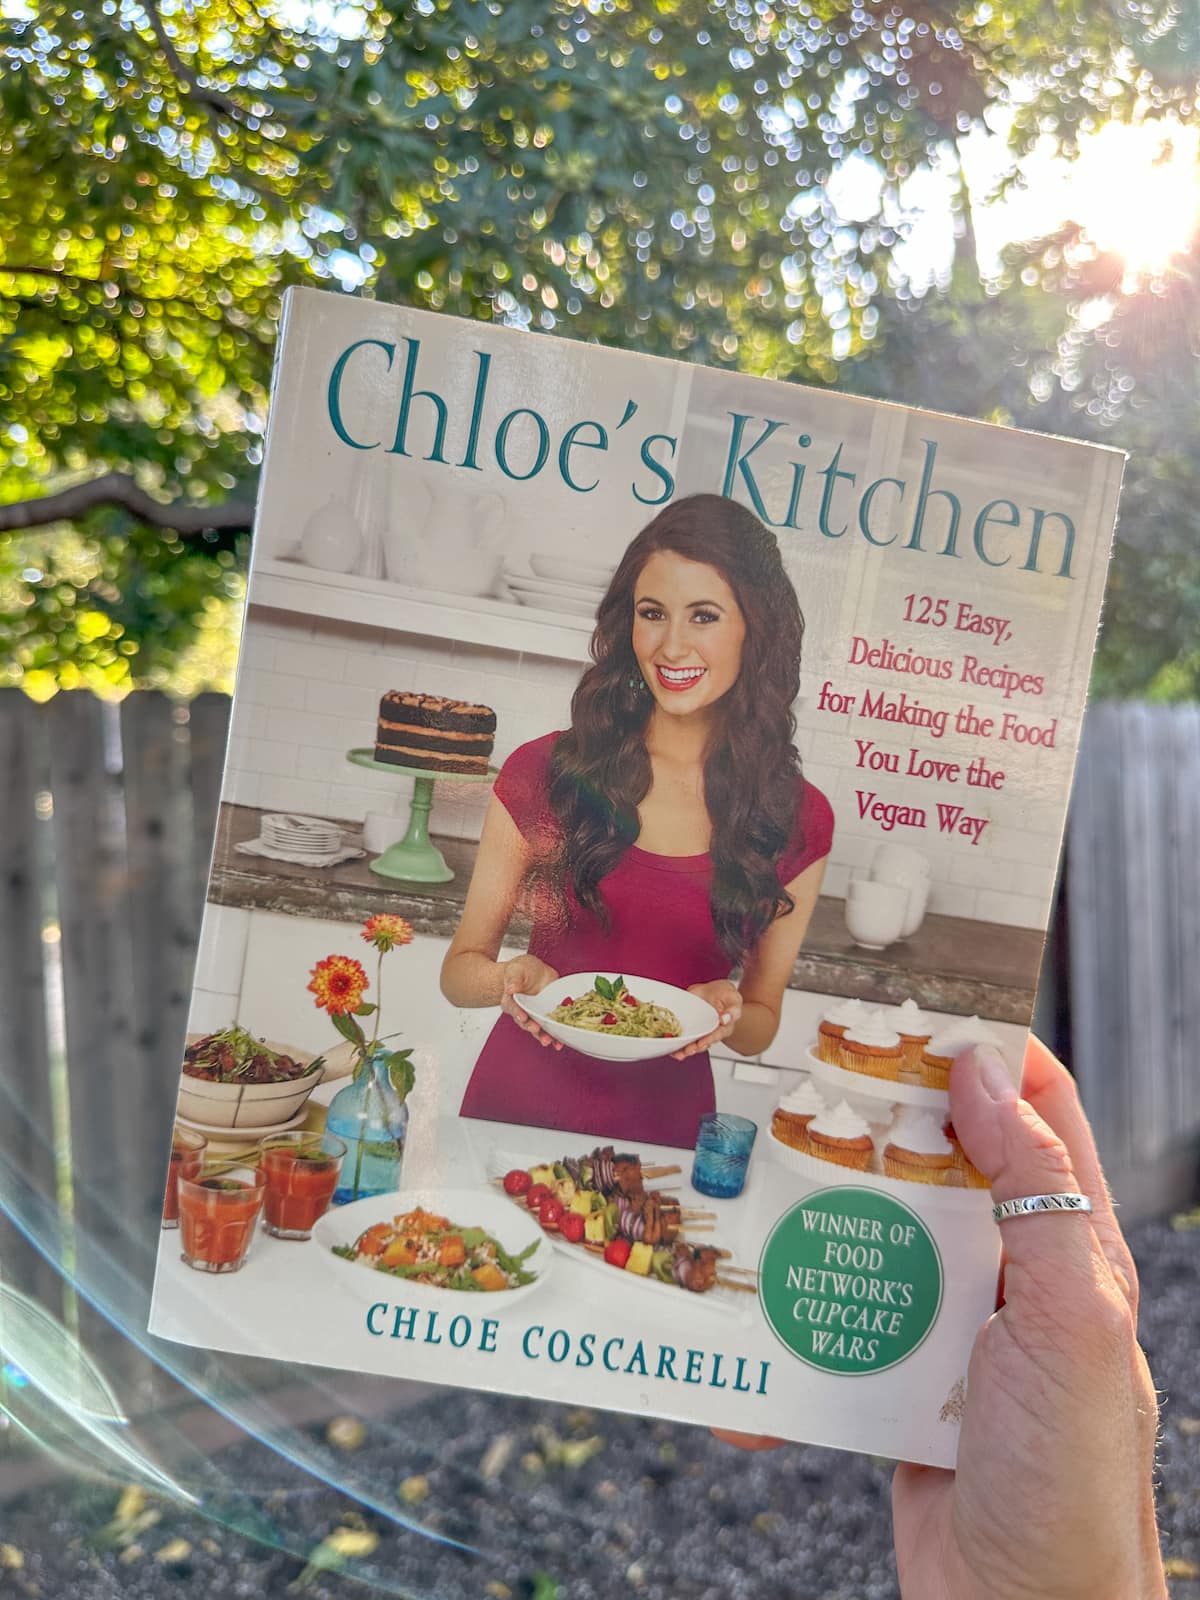 Cover art for Chloe's Kitchen vegan cookbook by Chloe Coscarelli.